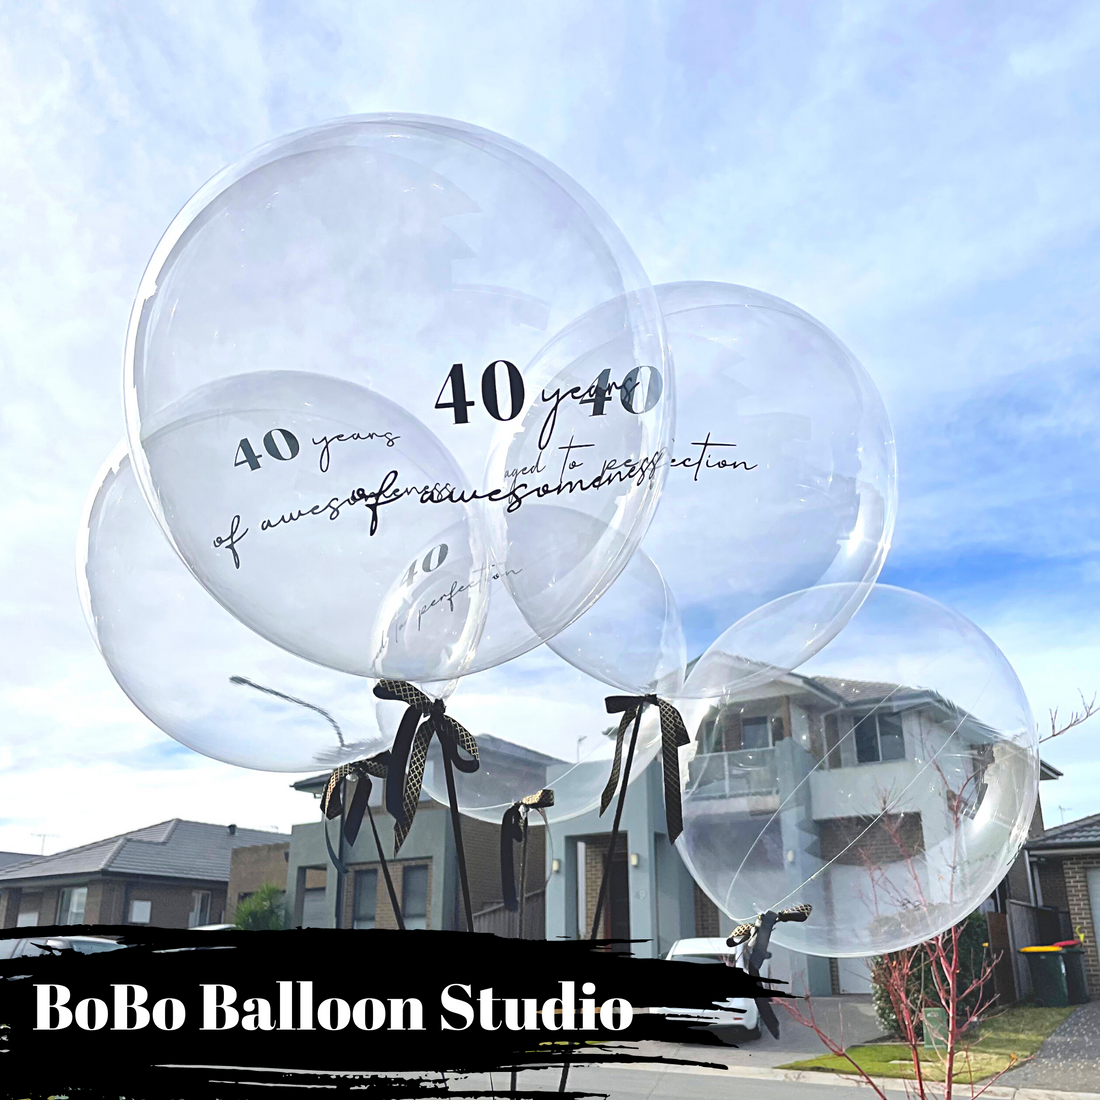 Blue Clear Bobo Balloon (24, 36)